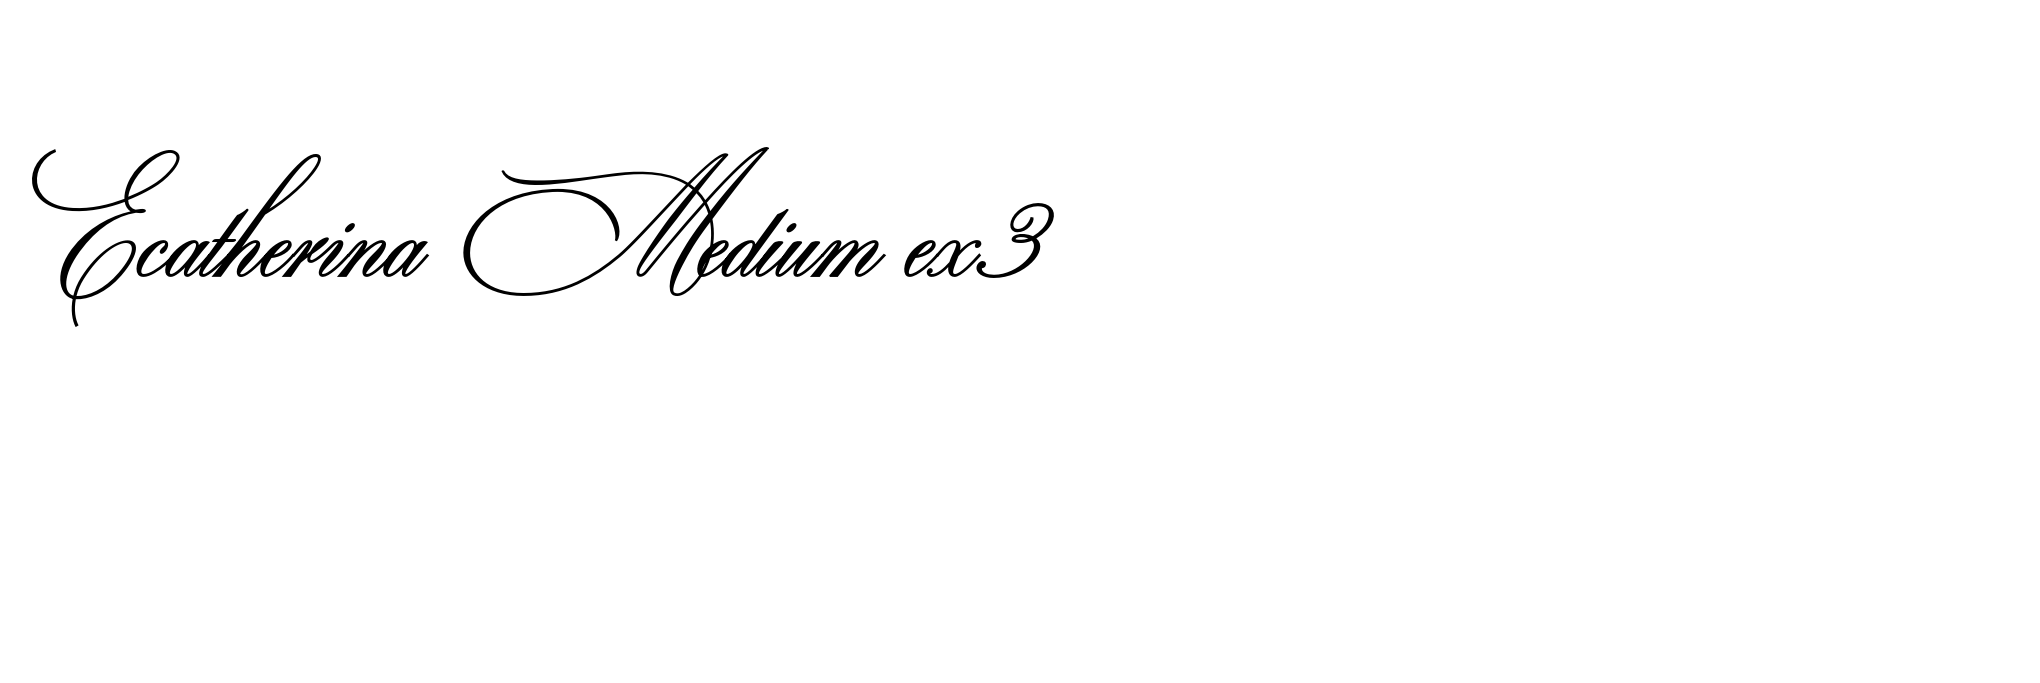 Ecatherina Medium ex3 image